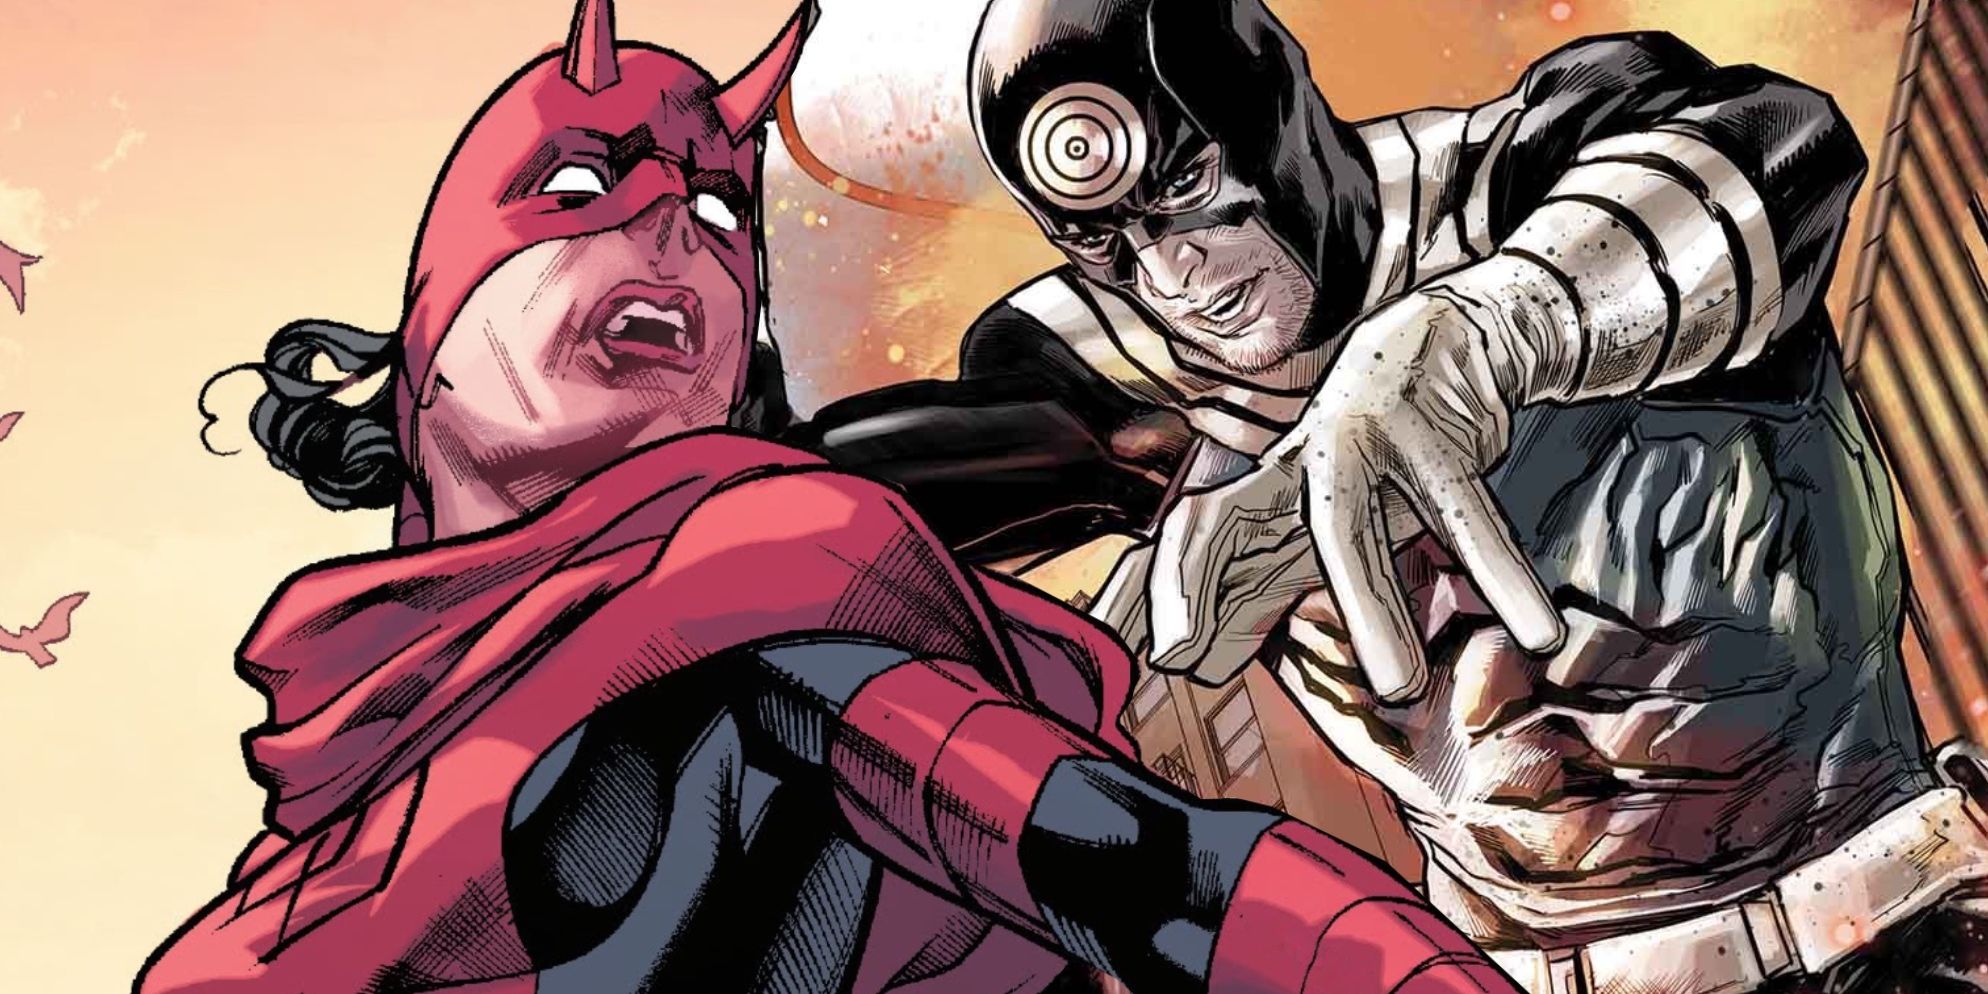 Superhero deaths in comics